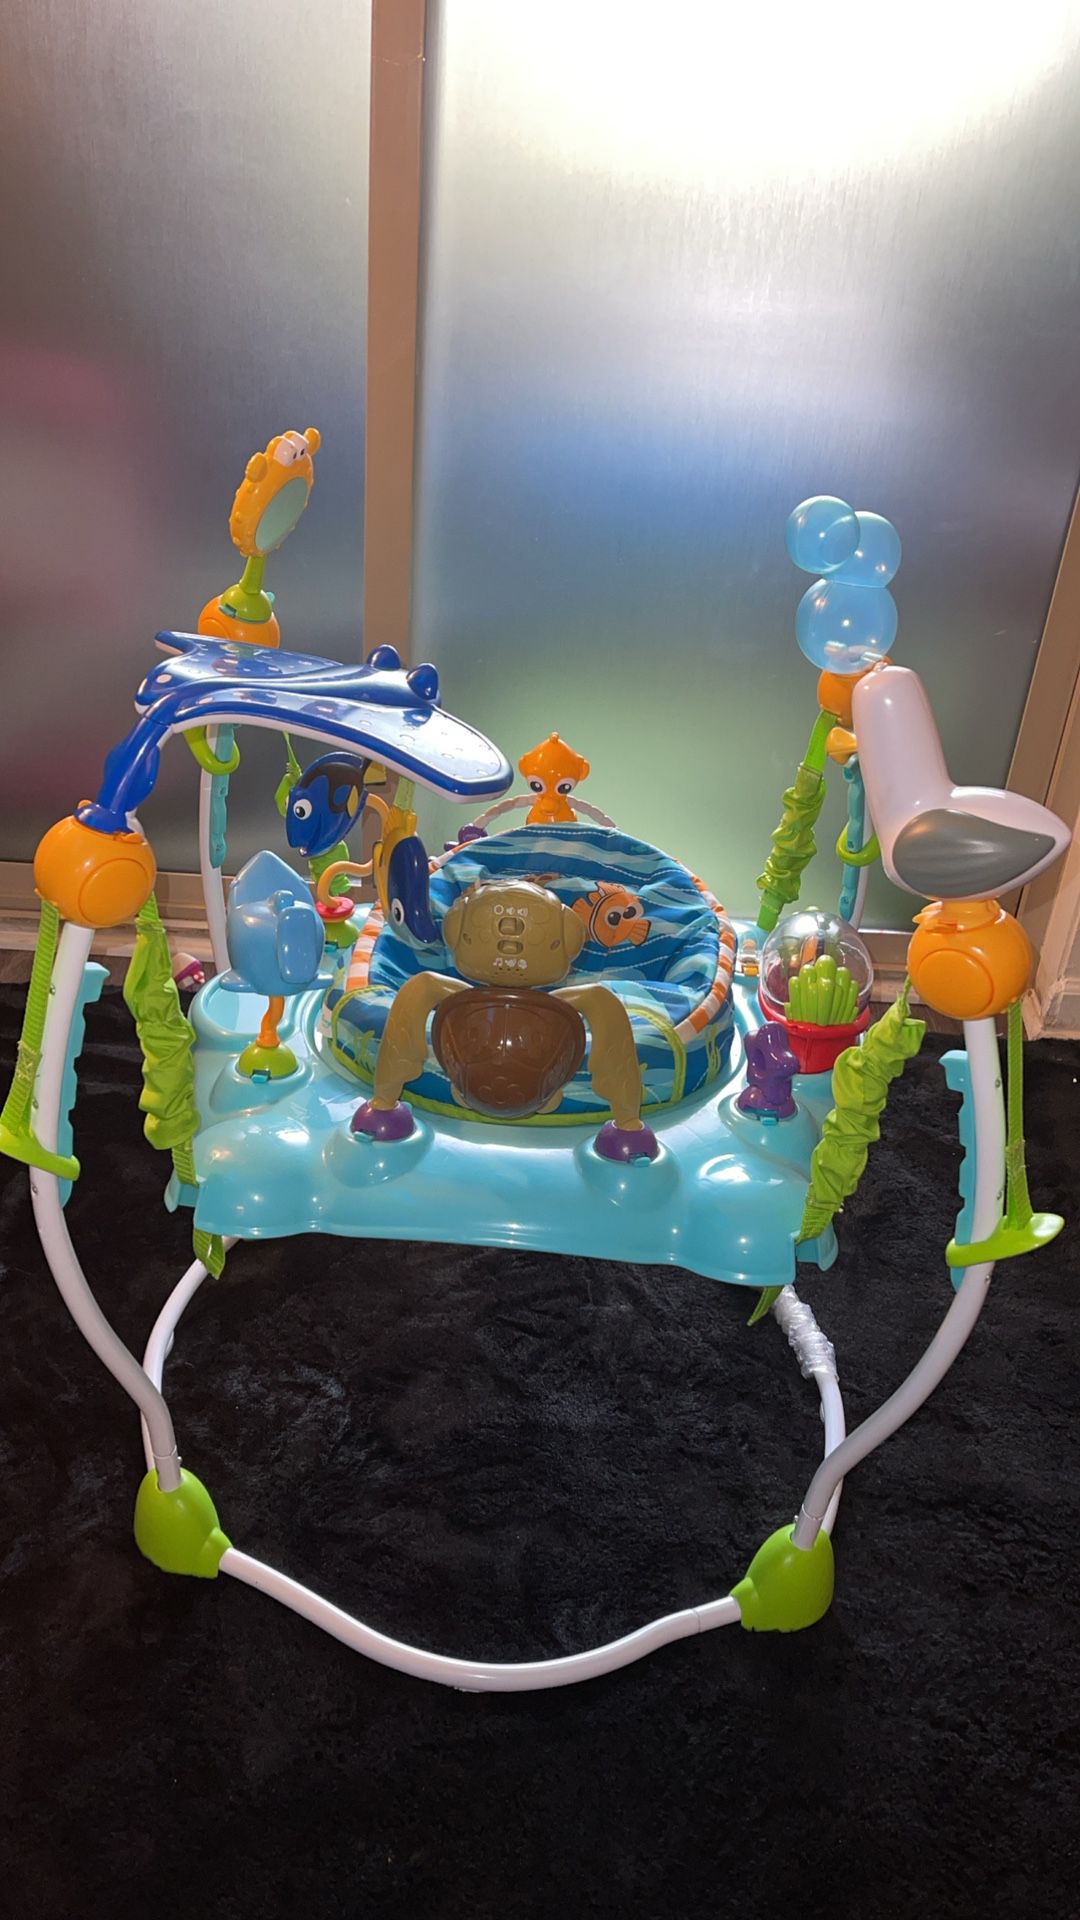  Bright Starts Disney Baby Finding Nemo Sea of Activities Jumper